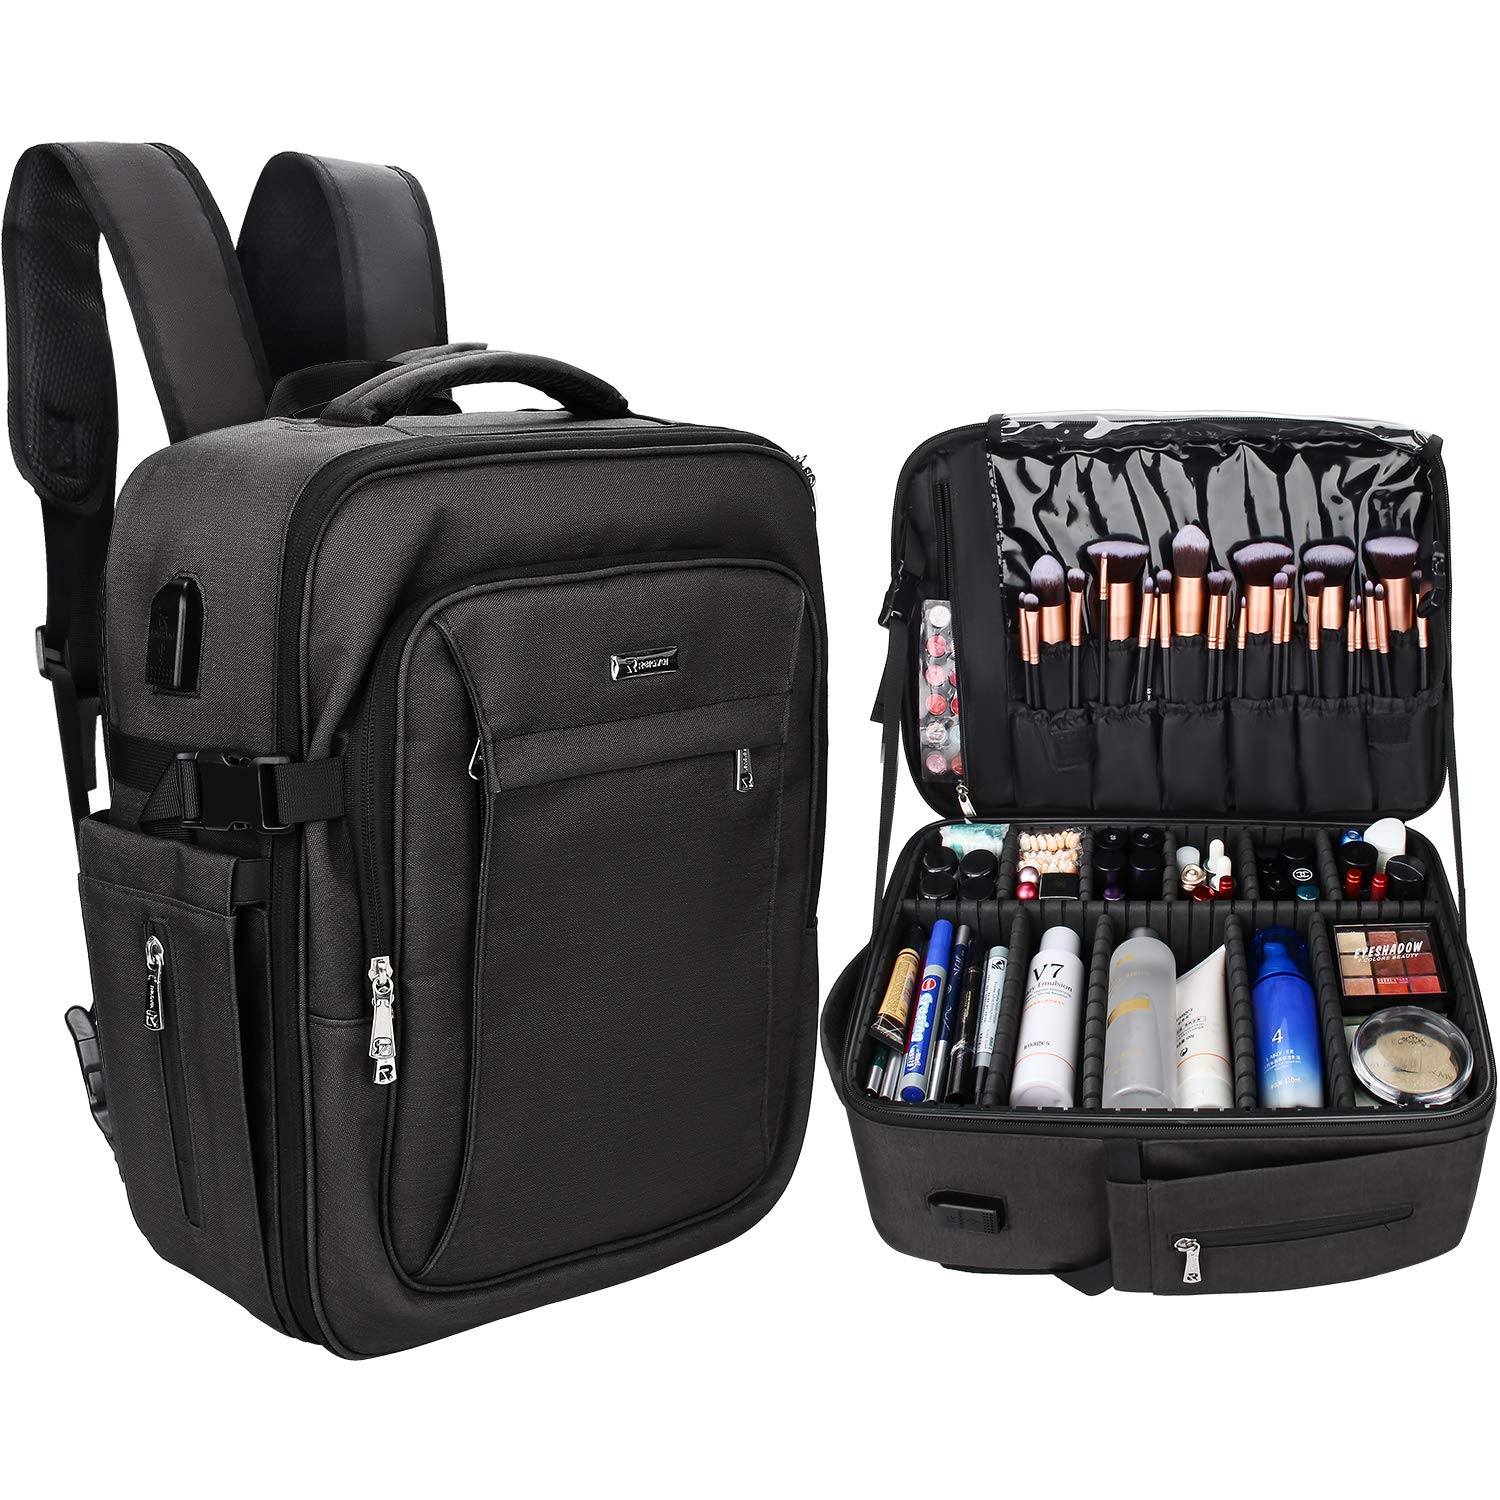 Relavel Makeup Backpack Professional Makeup Case Extra Large